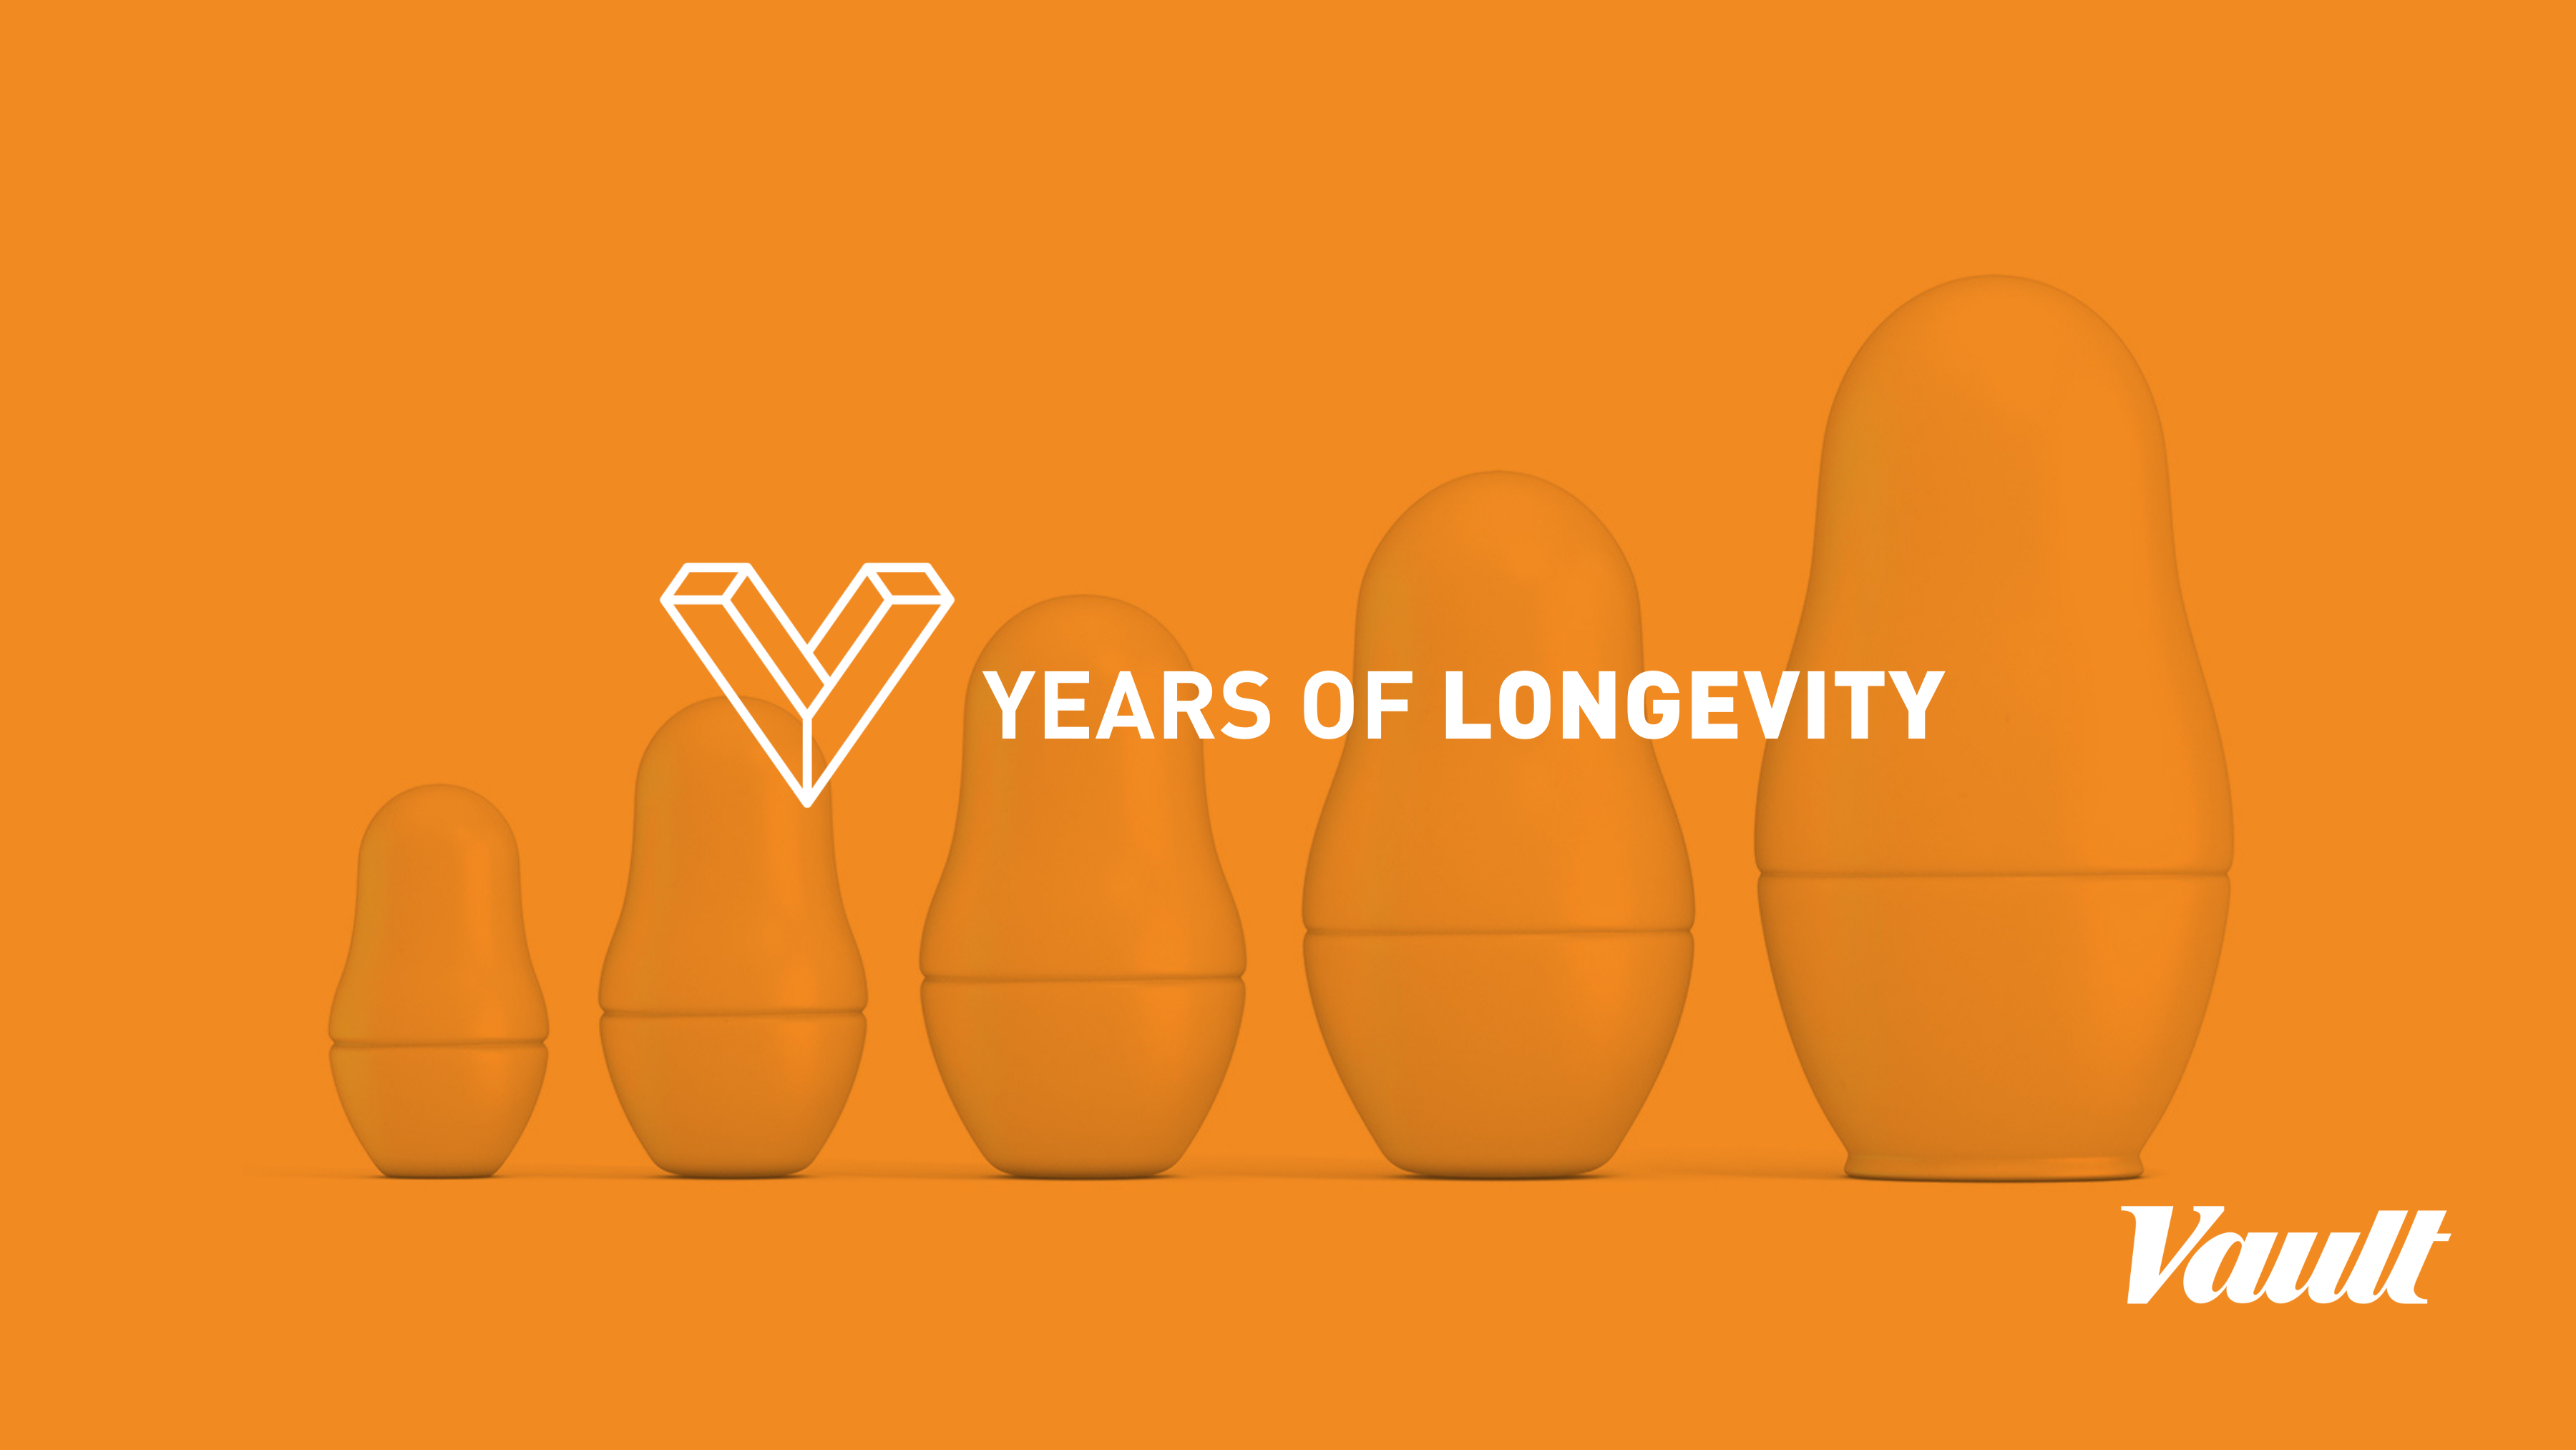 Celebrating 5 Years of Longevity